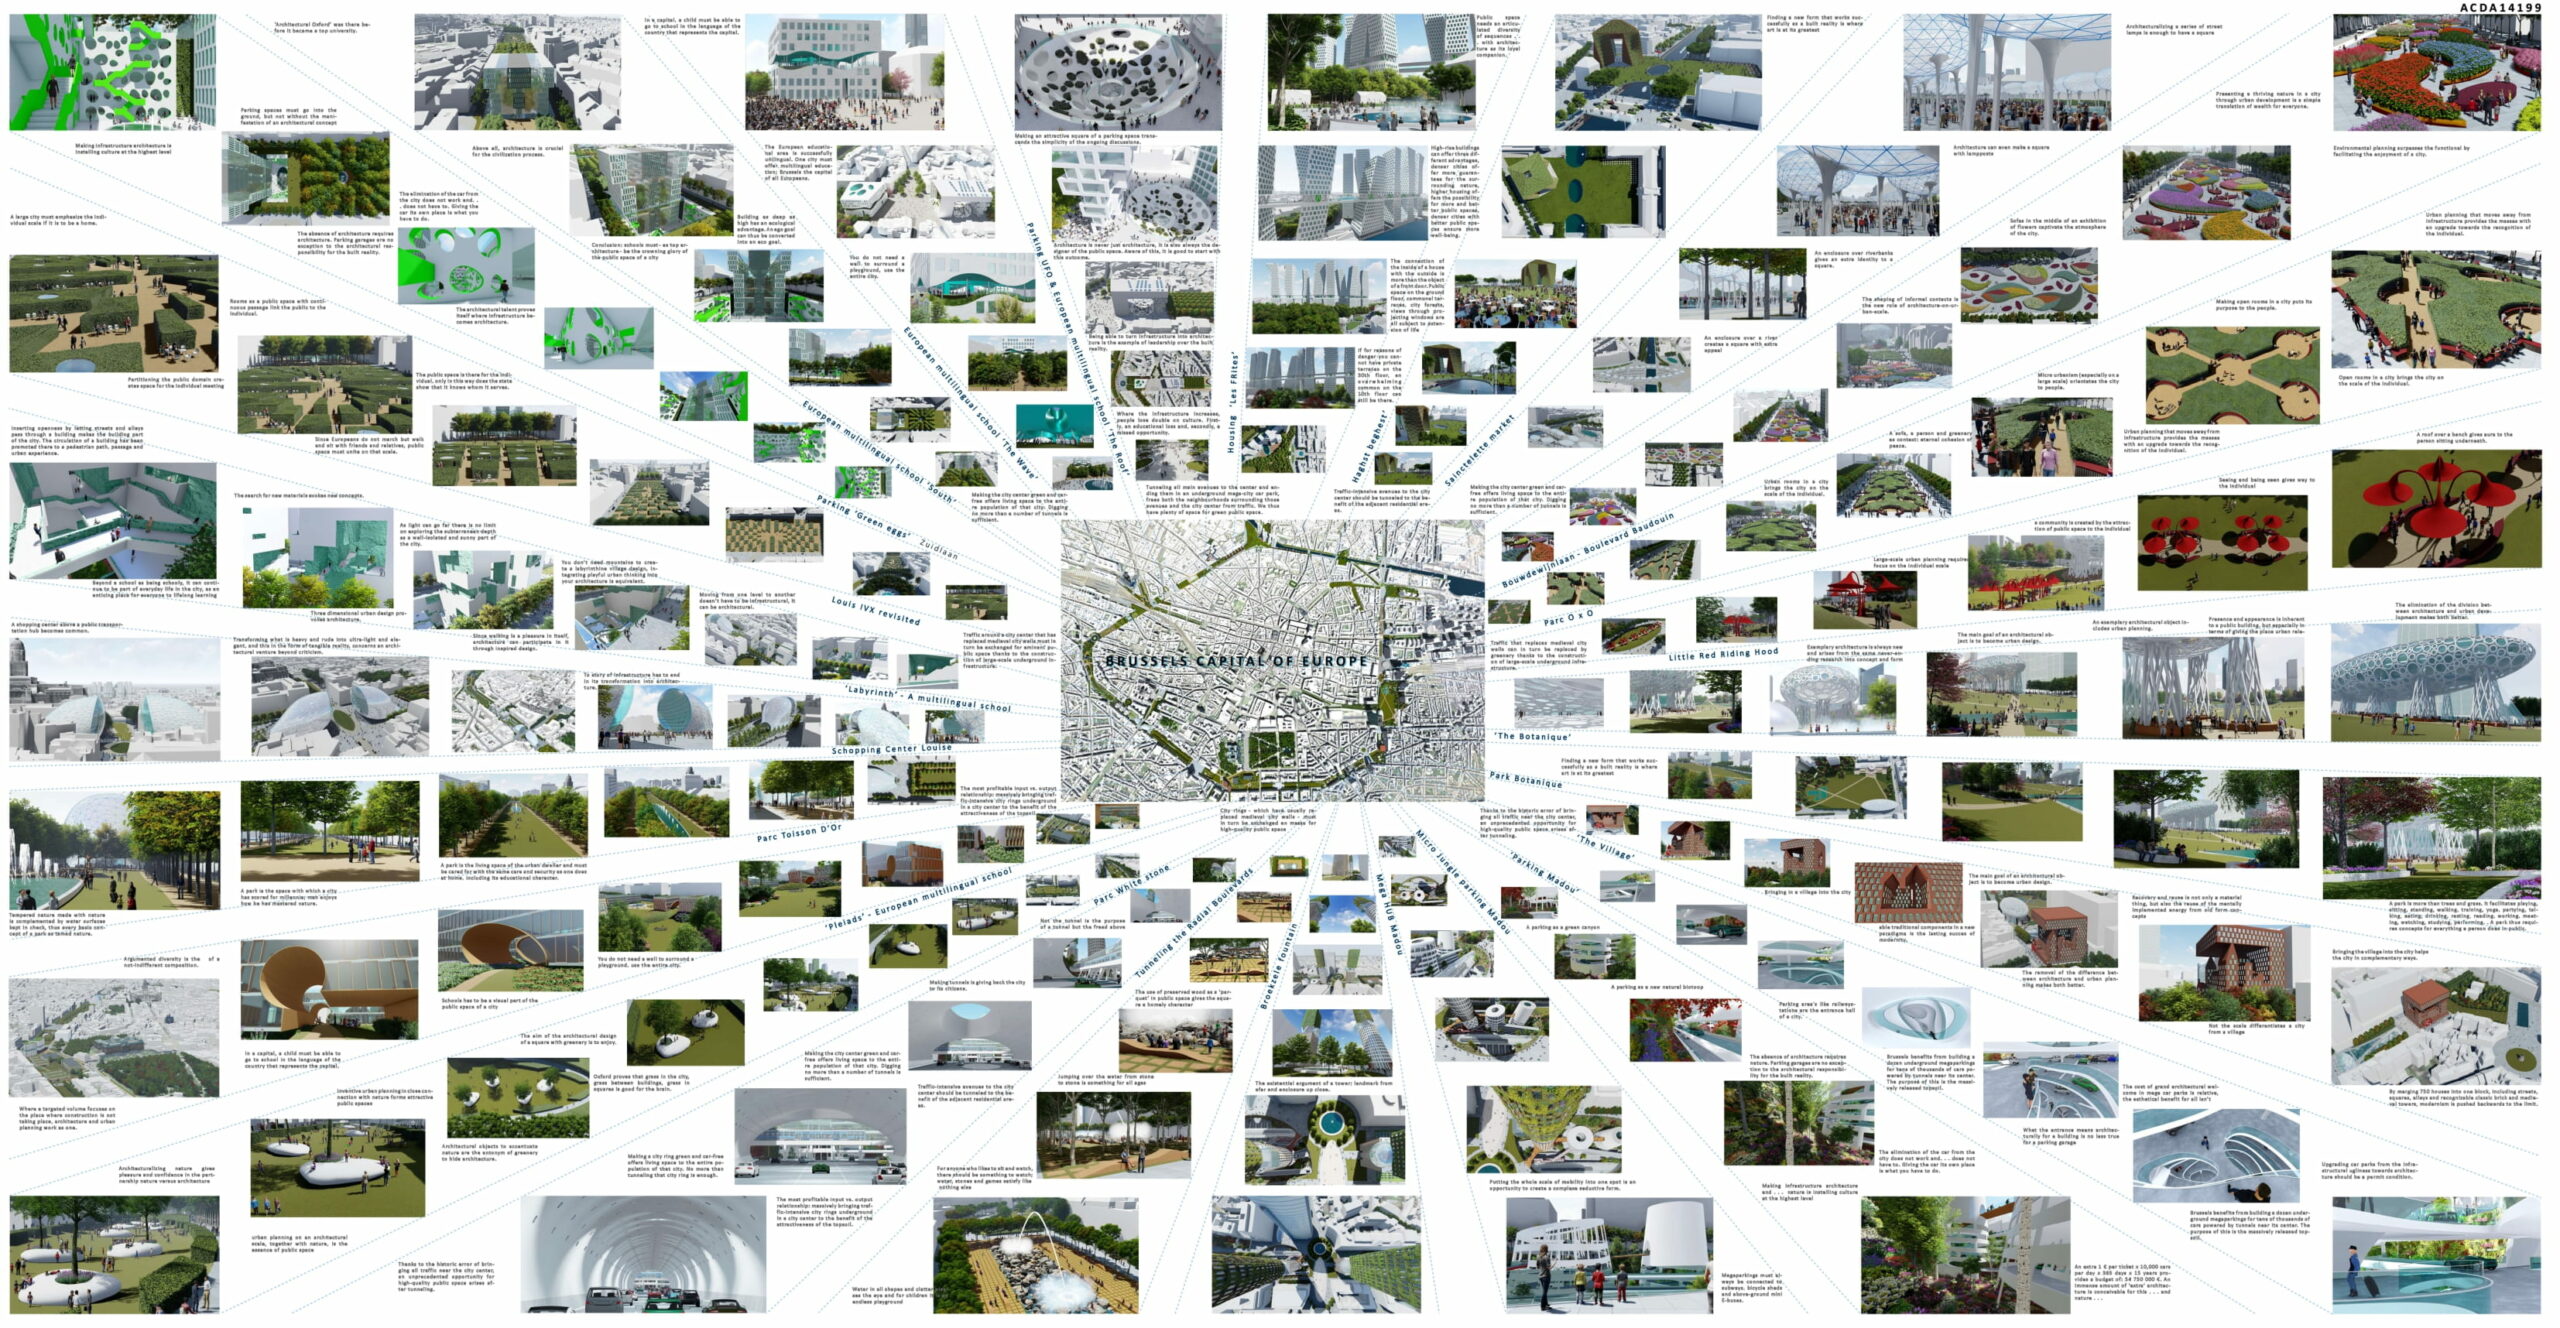 Brussels Capitol of Europe' | Architectenbureau Dirk Coopman - Sheet 1